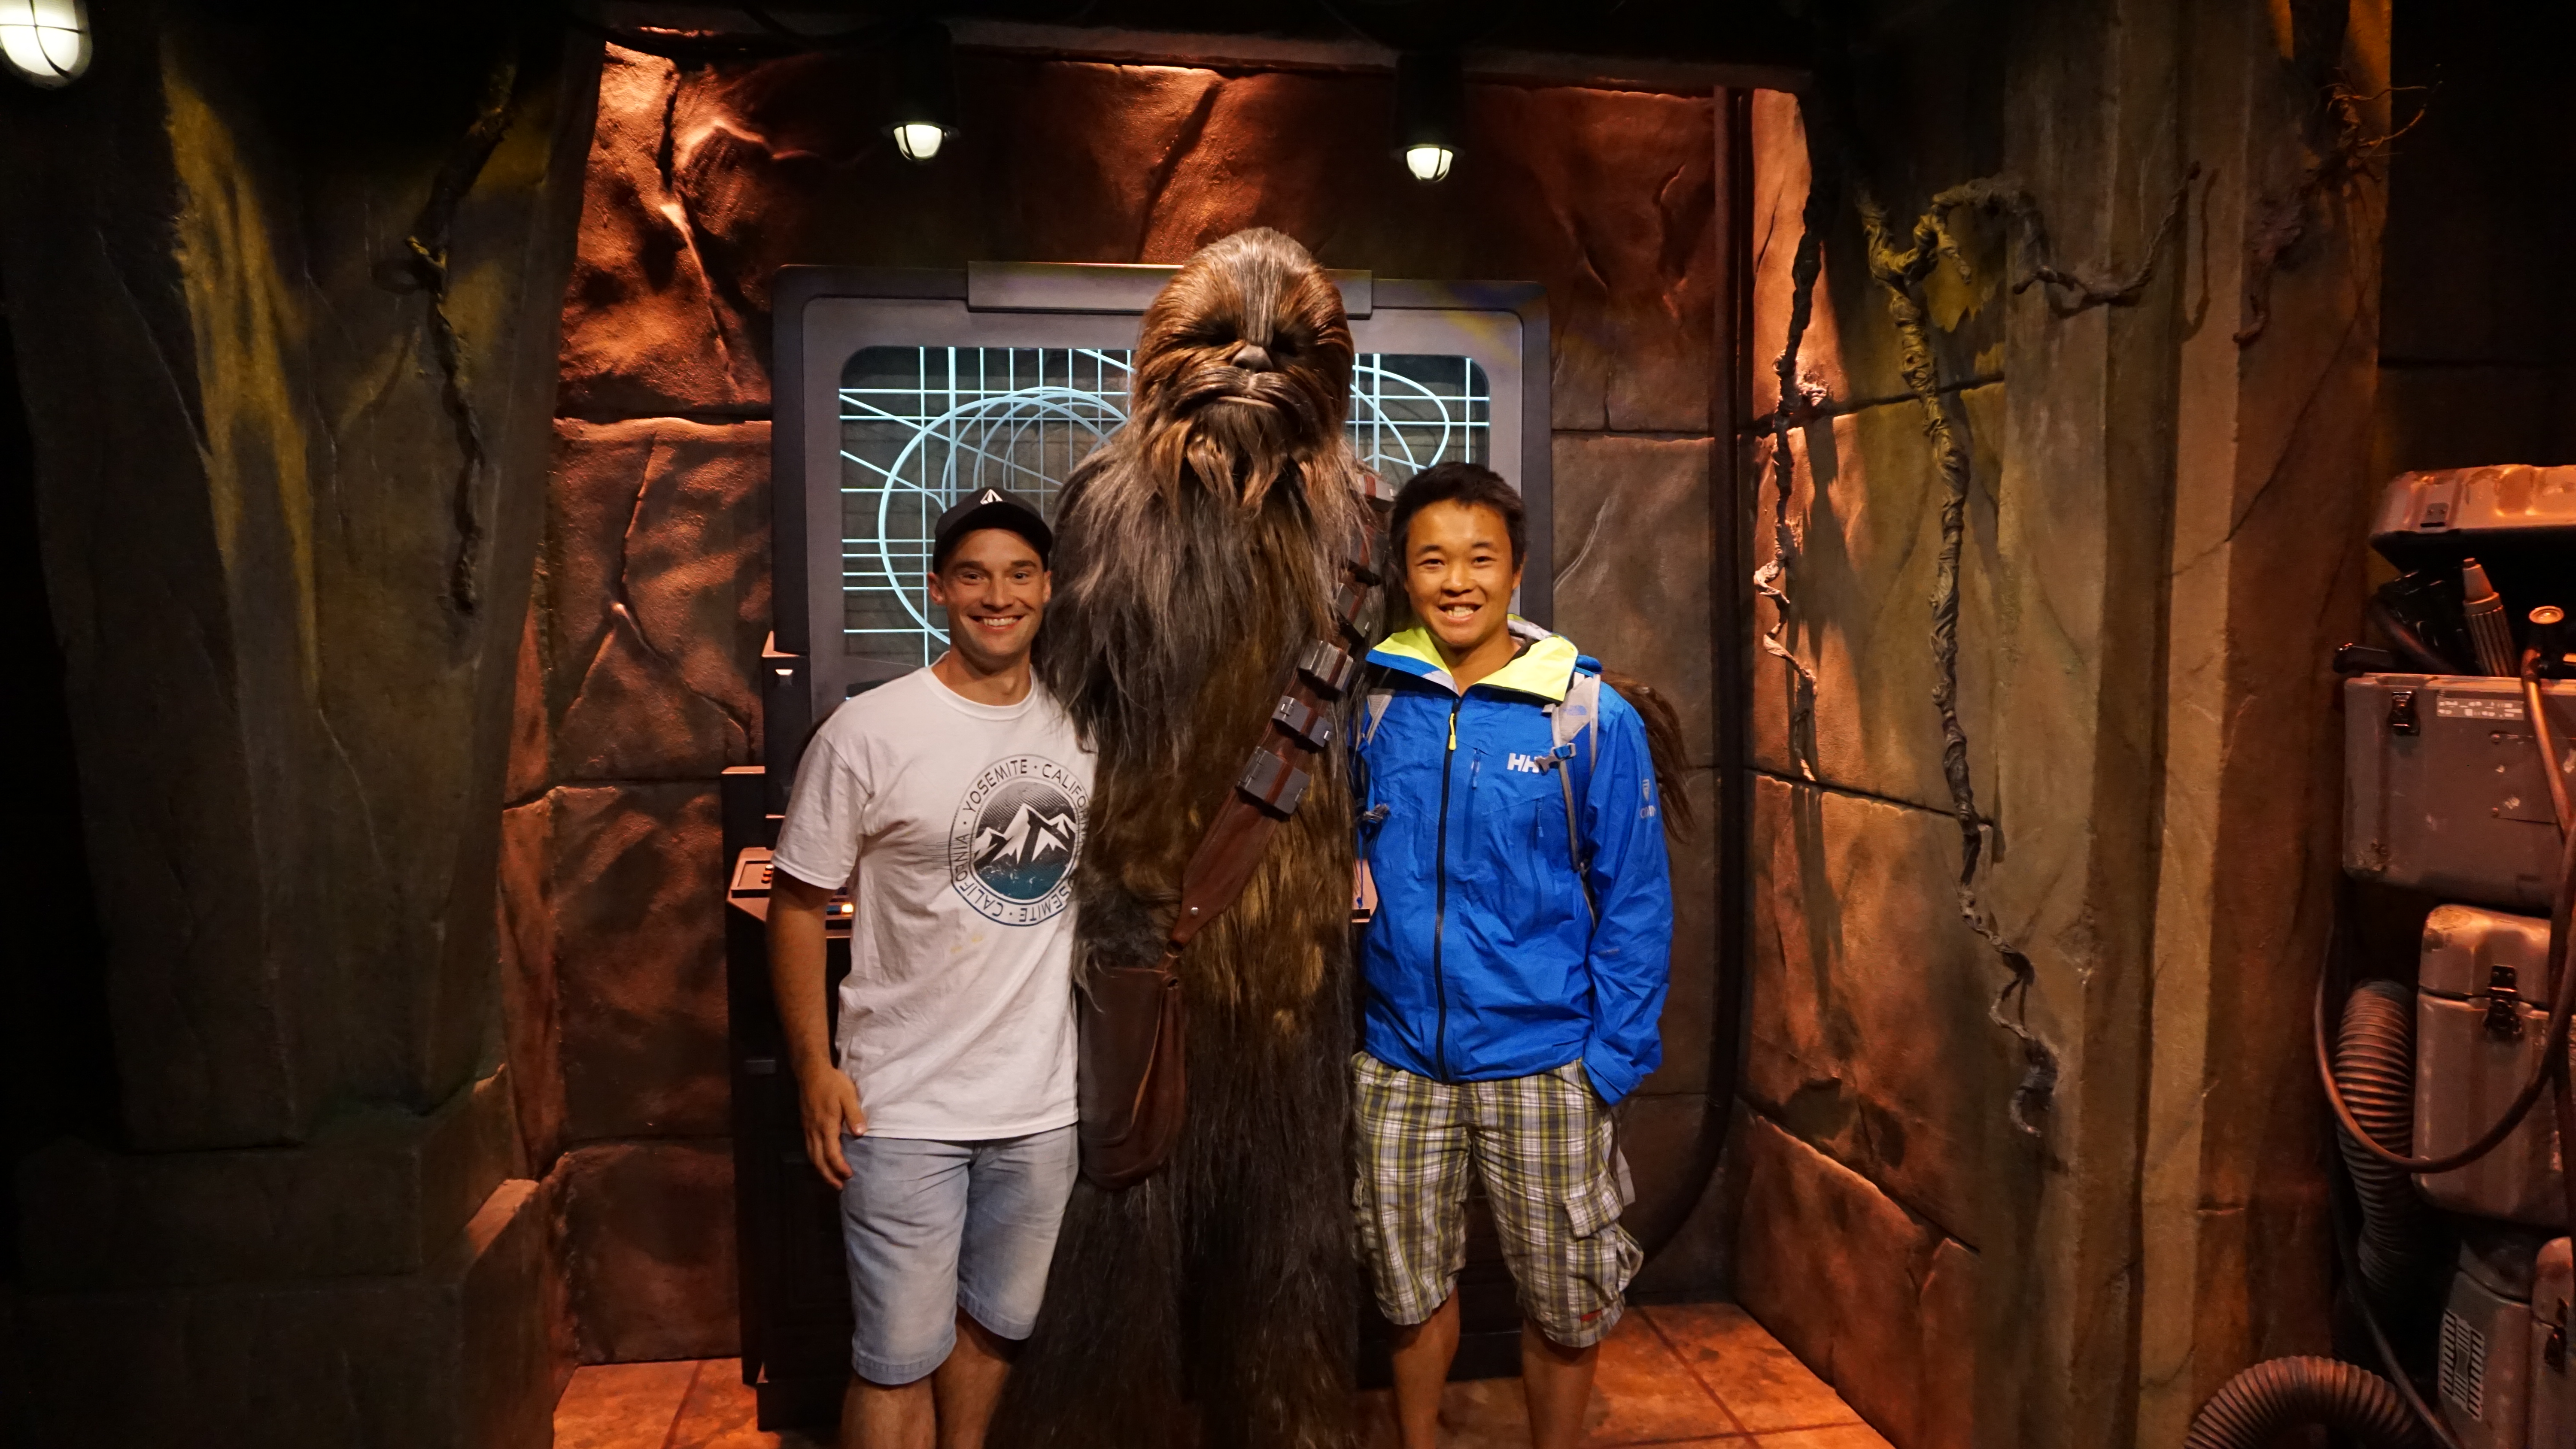 Chewbacca and Starwars in Disneyland, Los Angeles, California